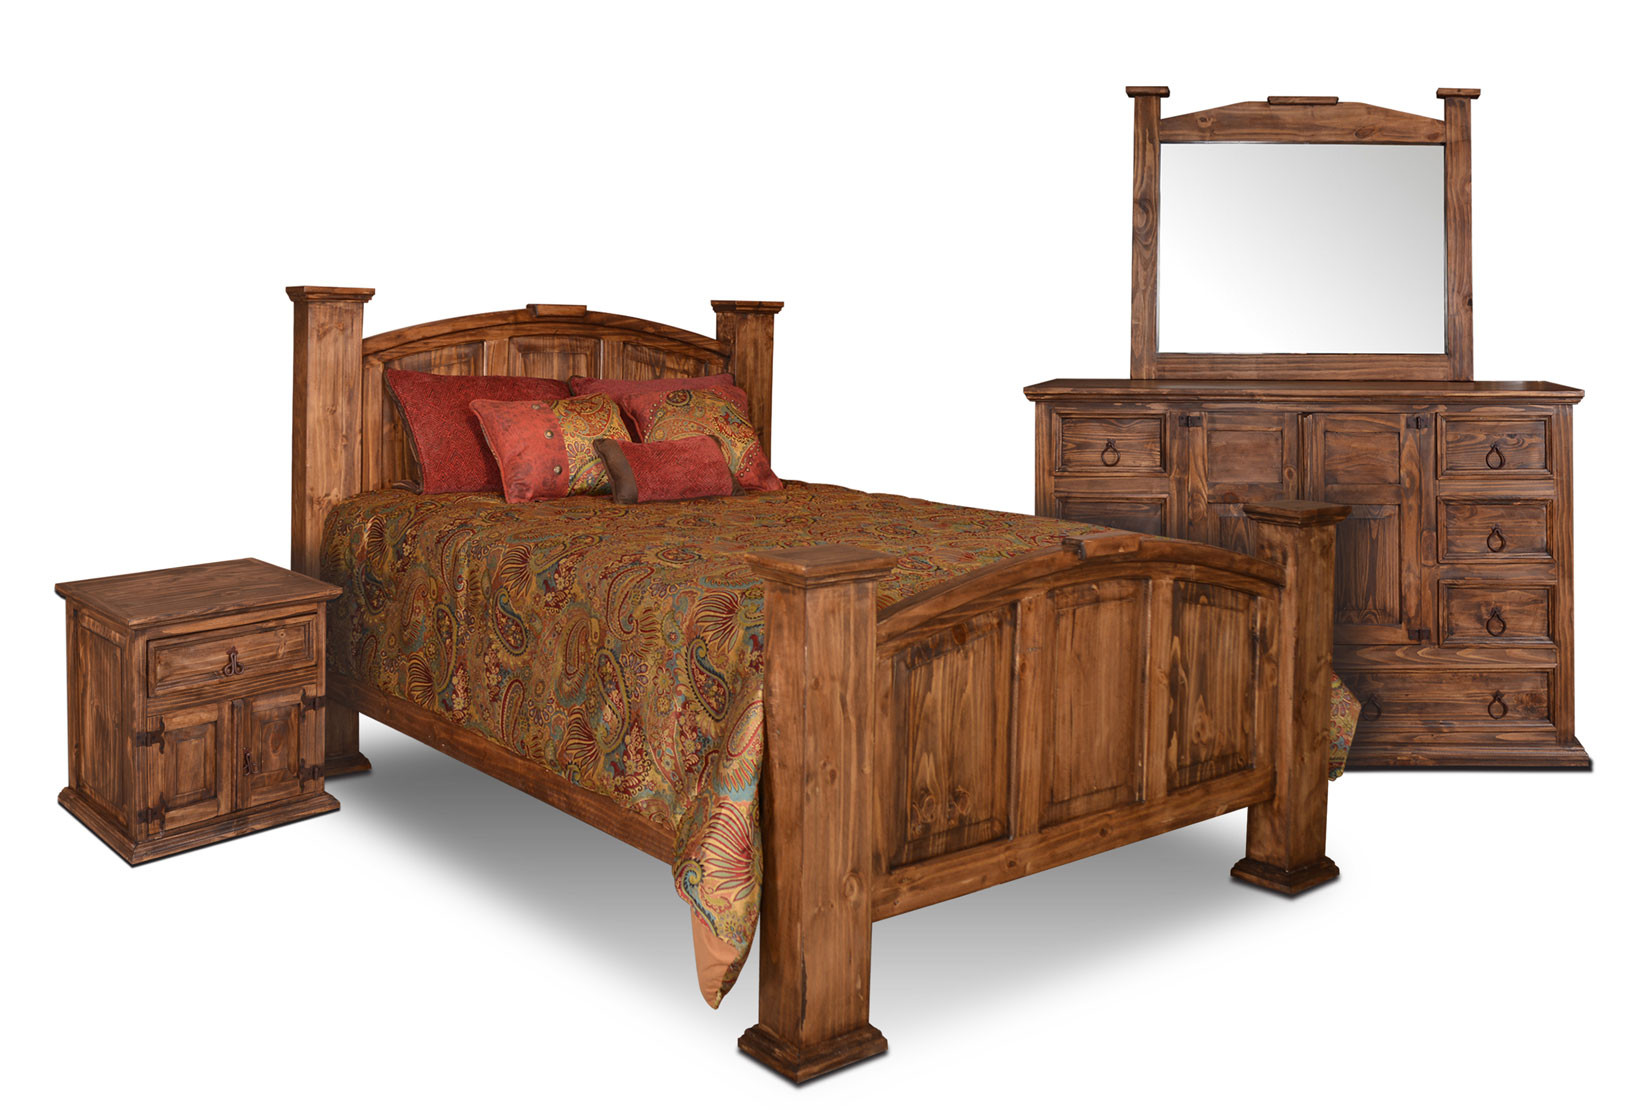 Rustic Wood Bedroom Furniture
 Rustic Bedroom Set Pine Wood Bedroom Set 4 Piece Bedroom Set